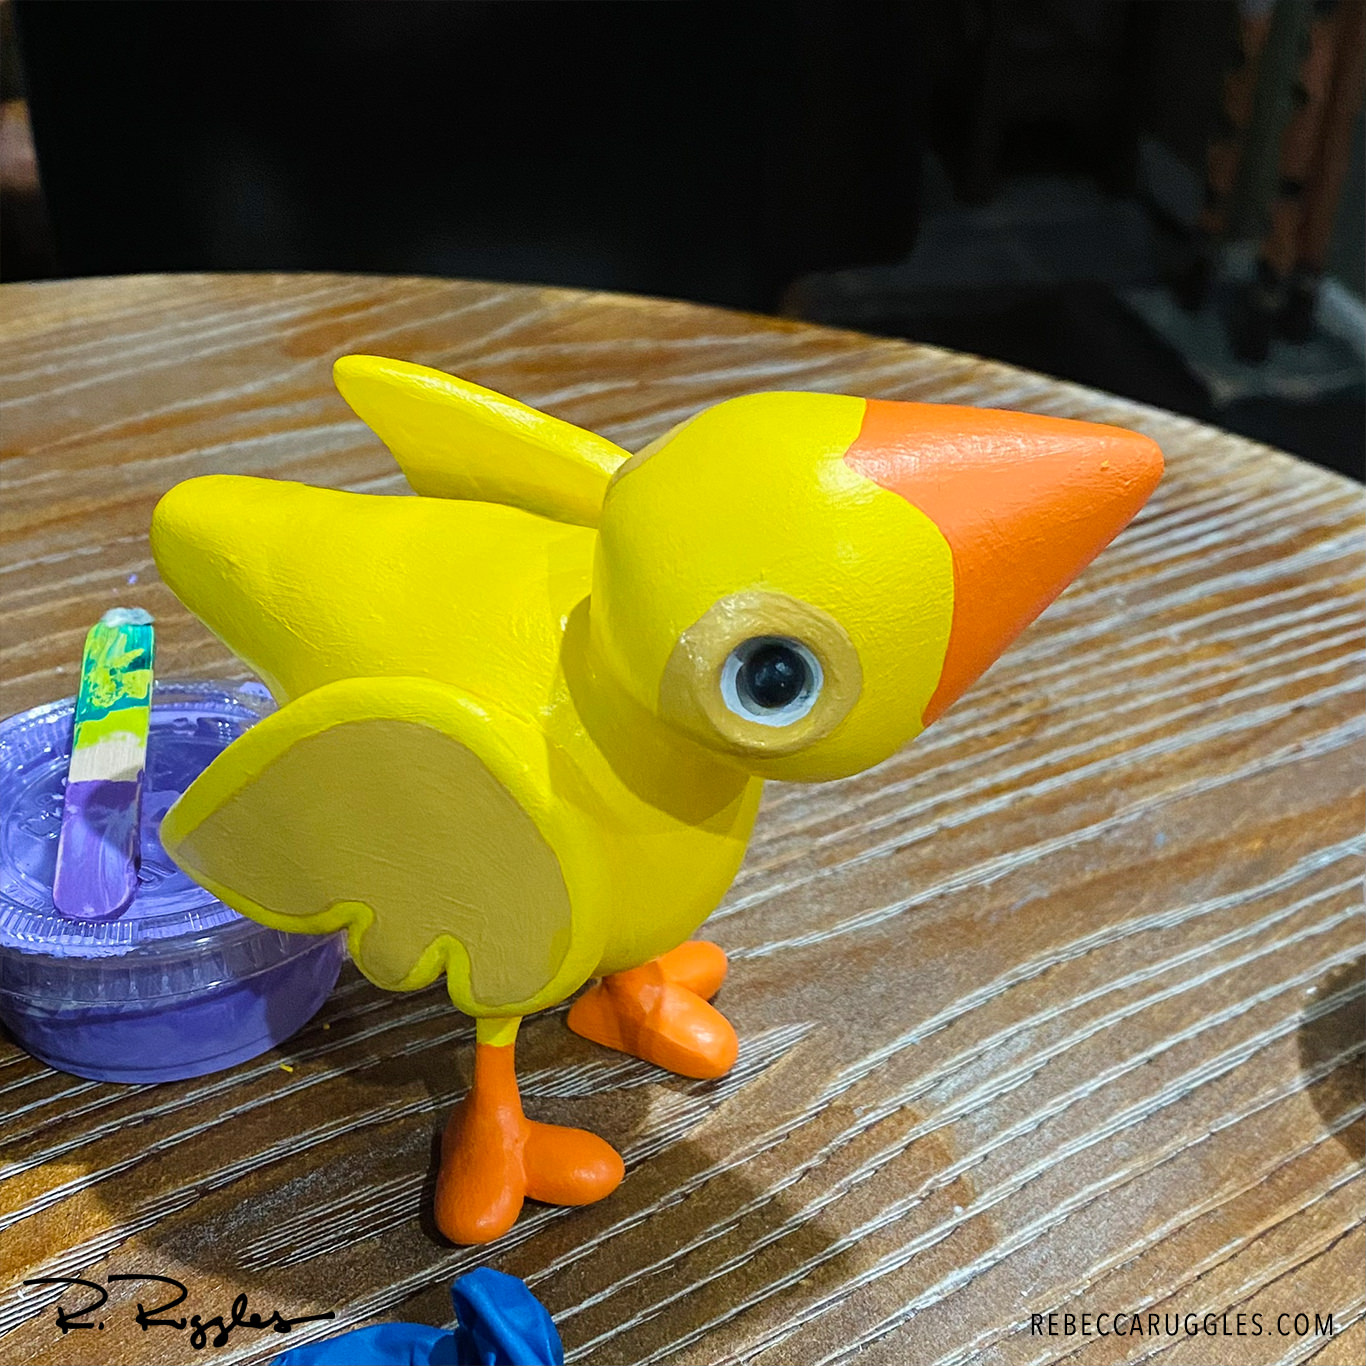 Little yellow bird sculpture by Rebecca Ruggles.